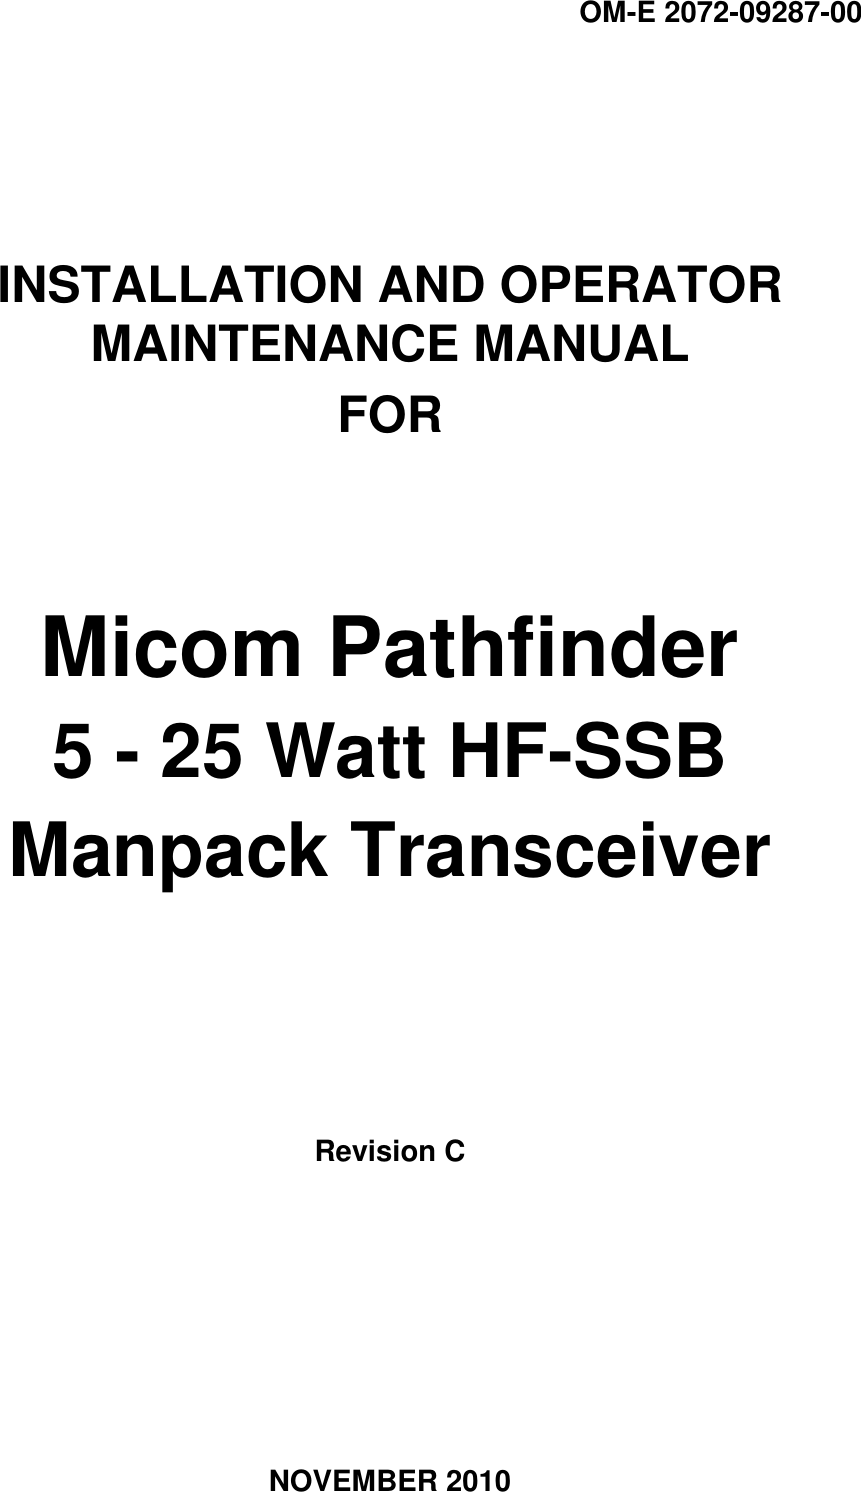 OM-E 2072-09287-00    INSTALLATION AND OPERATOR MAINTENANCE MANUAL FOR   Micom Pathfinder 5 - 25 Watt HF-SSB Manpack Transceiver     Revision C      NOVEMBER 2010 